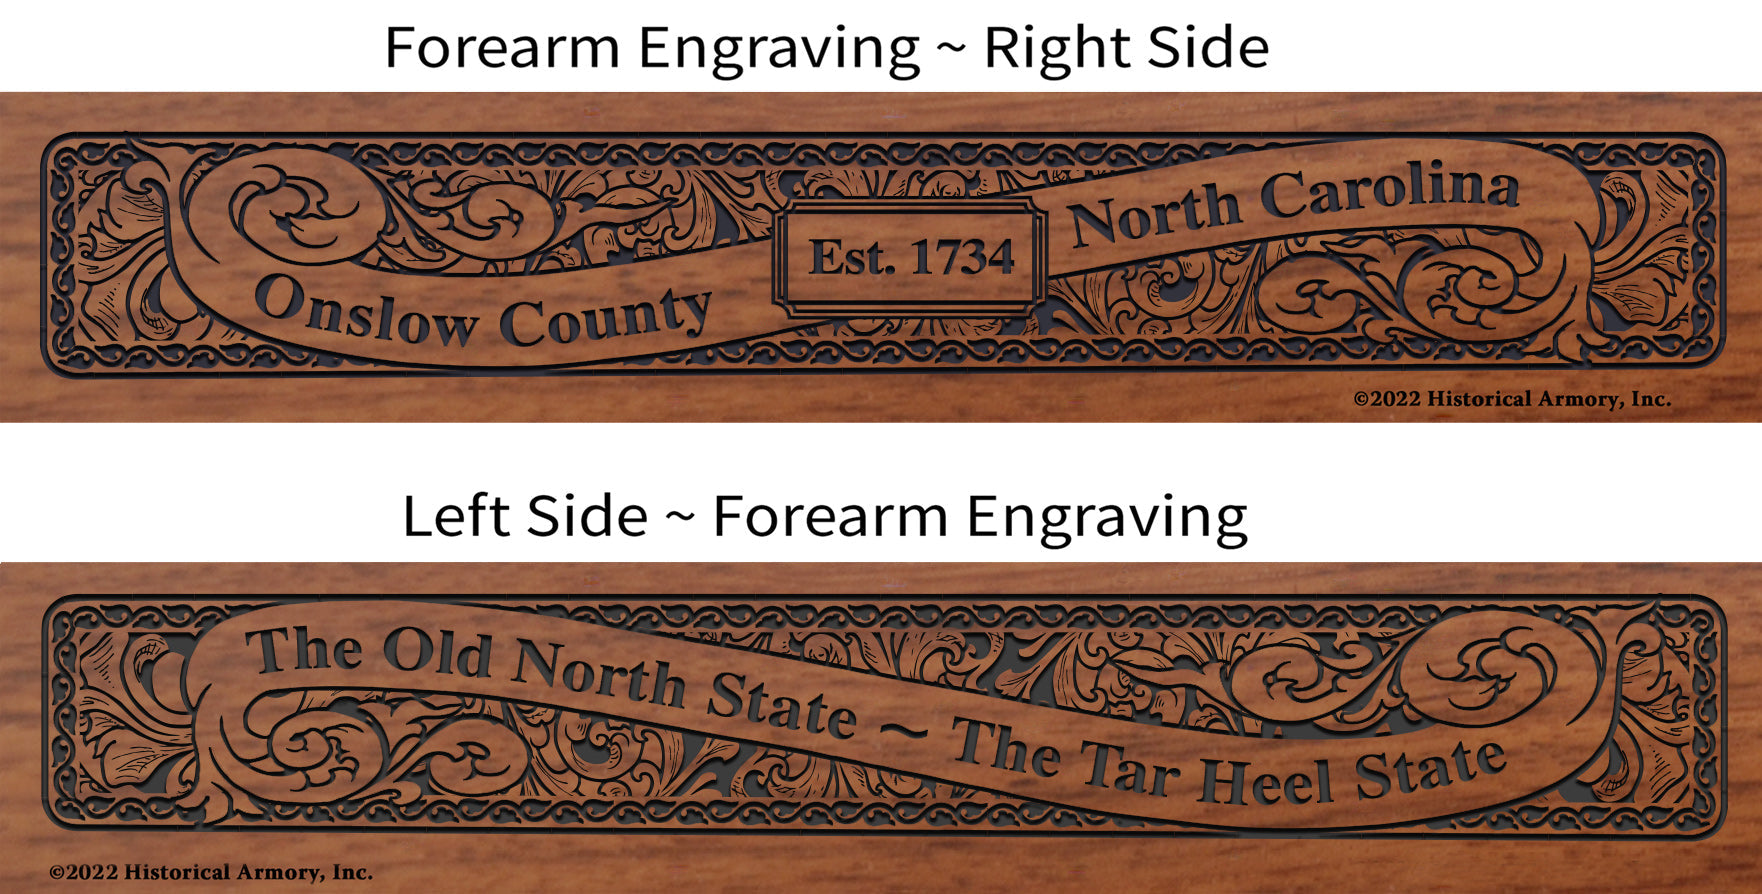 Onslow County North Carolina Engraved Rifle Forearm